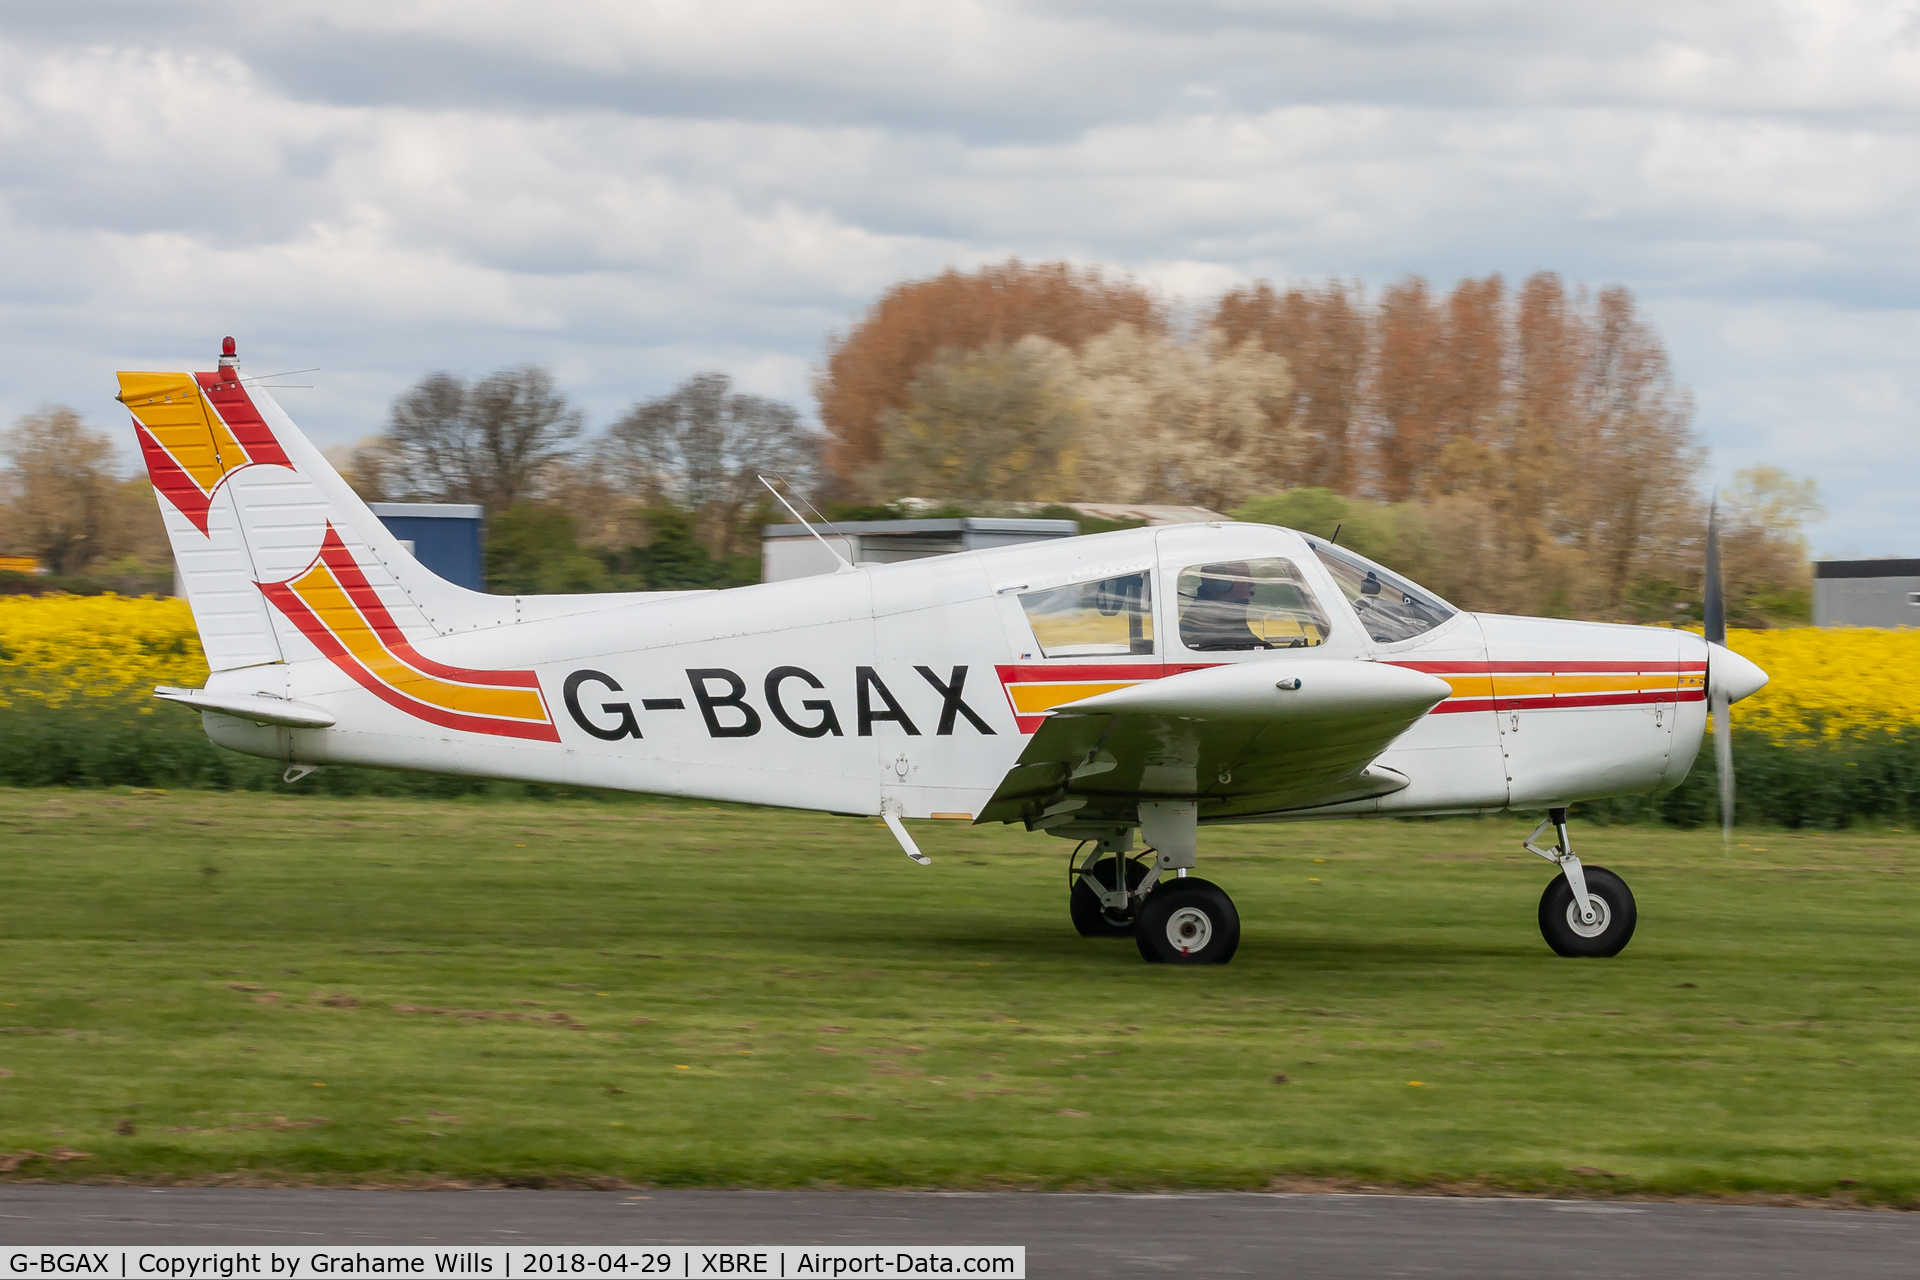 G-BGAX, 1973 Piper PA-28-140 Cherokee C/N 28-7325409, Piper PA-28 Cherokee 140 G-BGAX G-BGAX Group Breighton 29/4/18